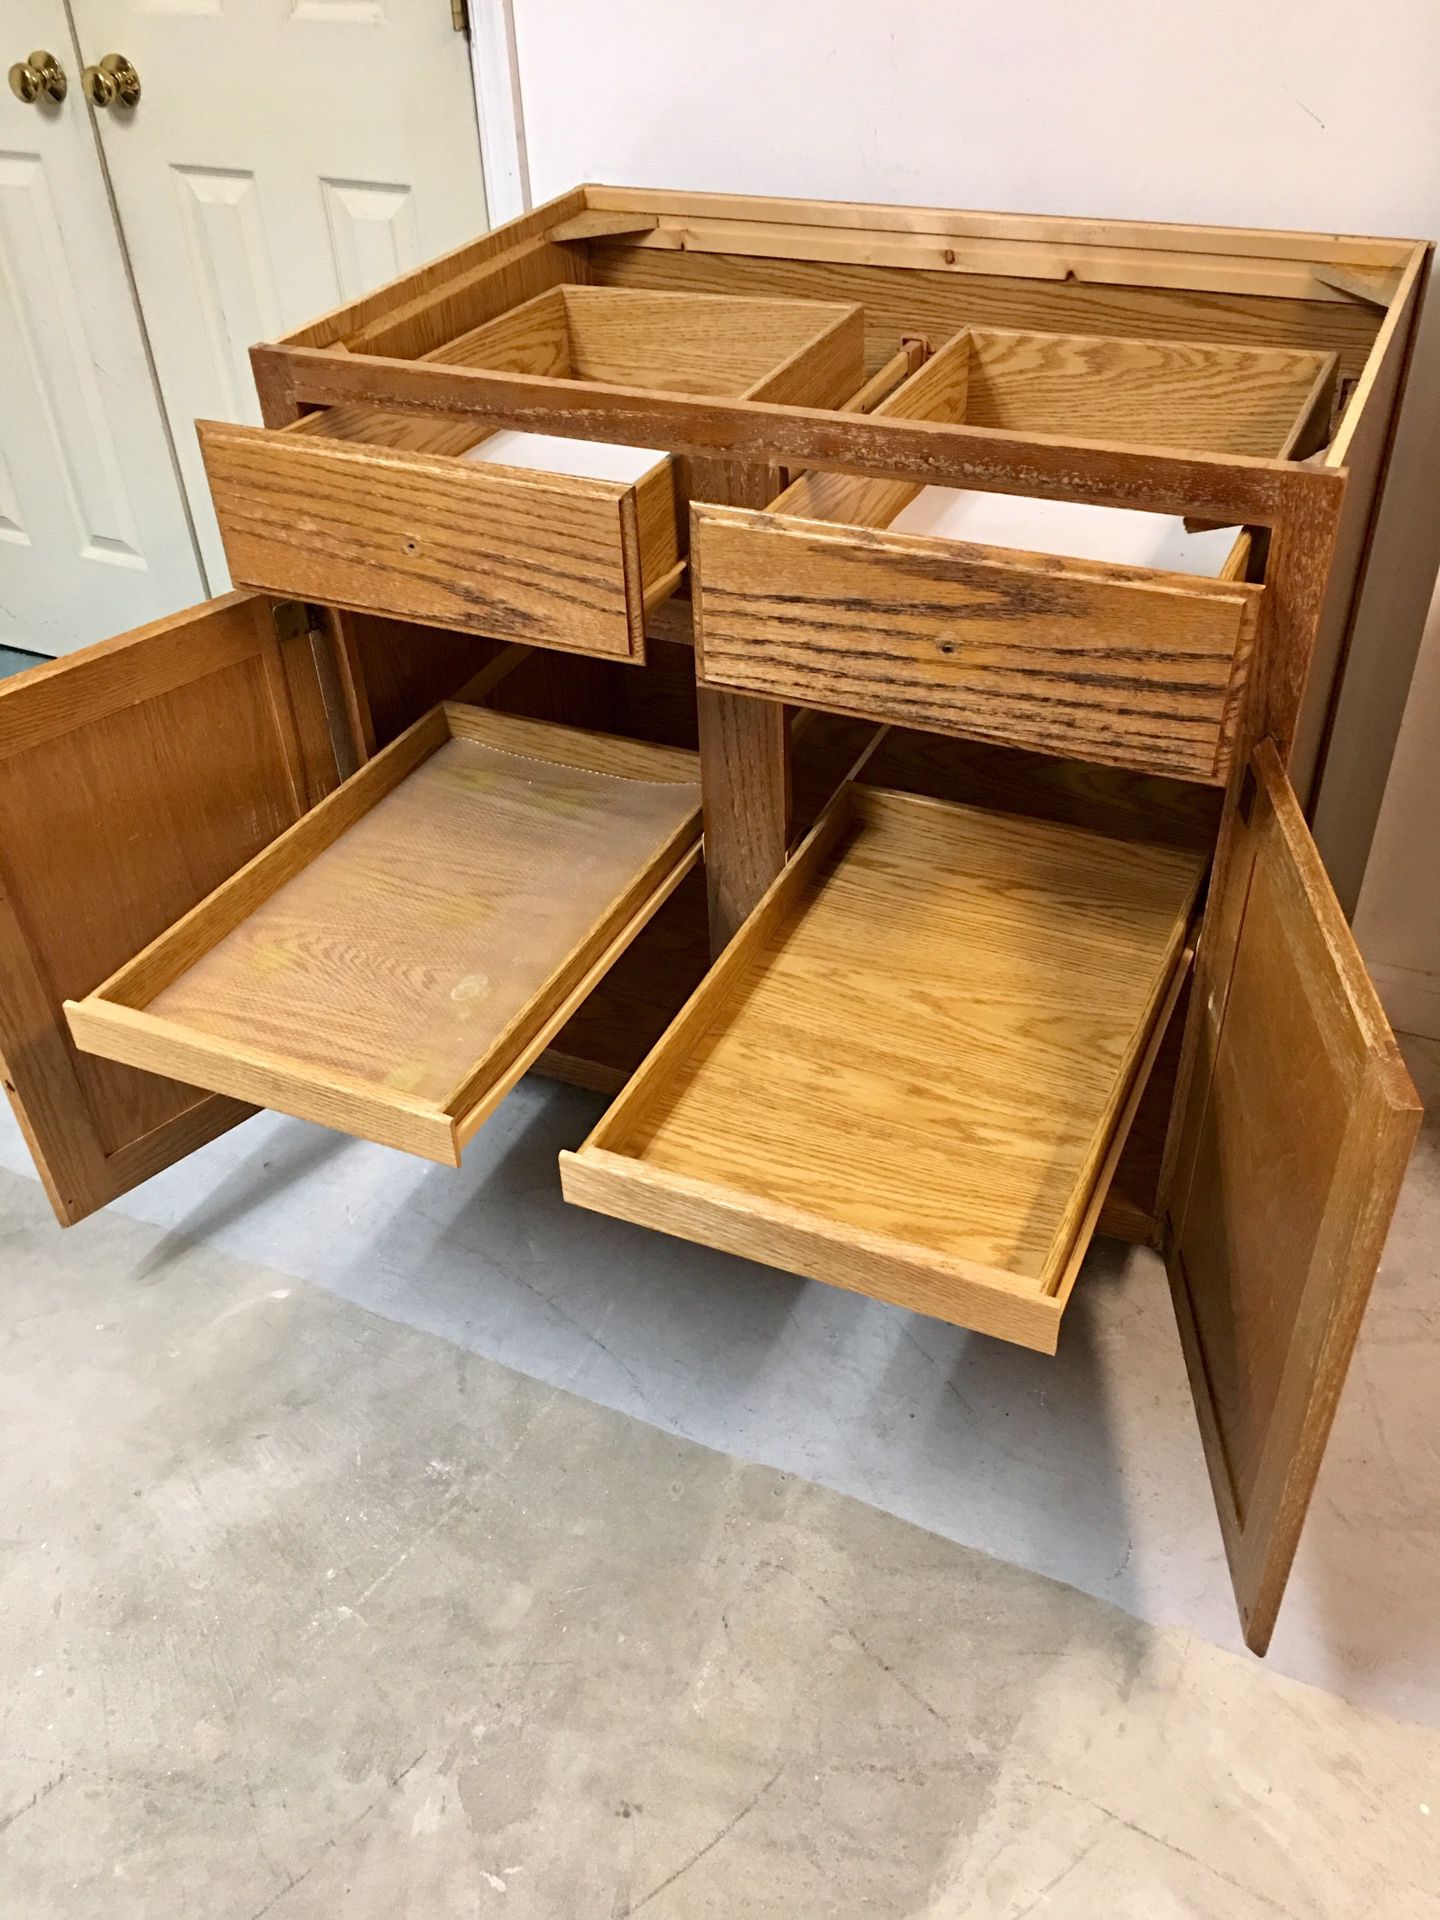 2 Solid Oak Kitchen Island Cabinets 36” & 42” wide.